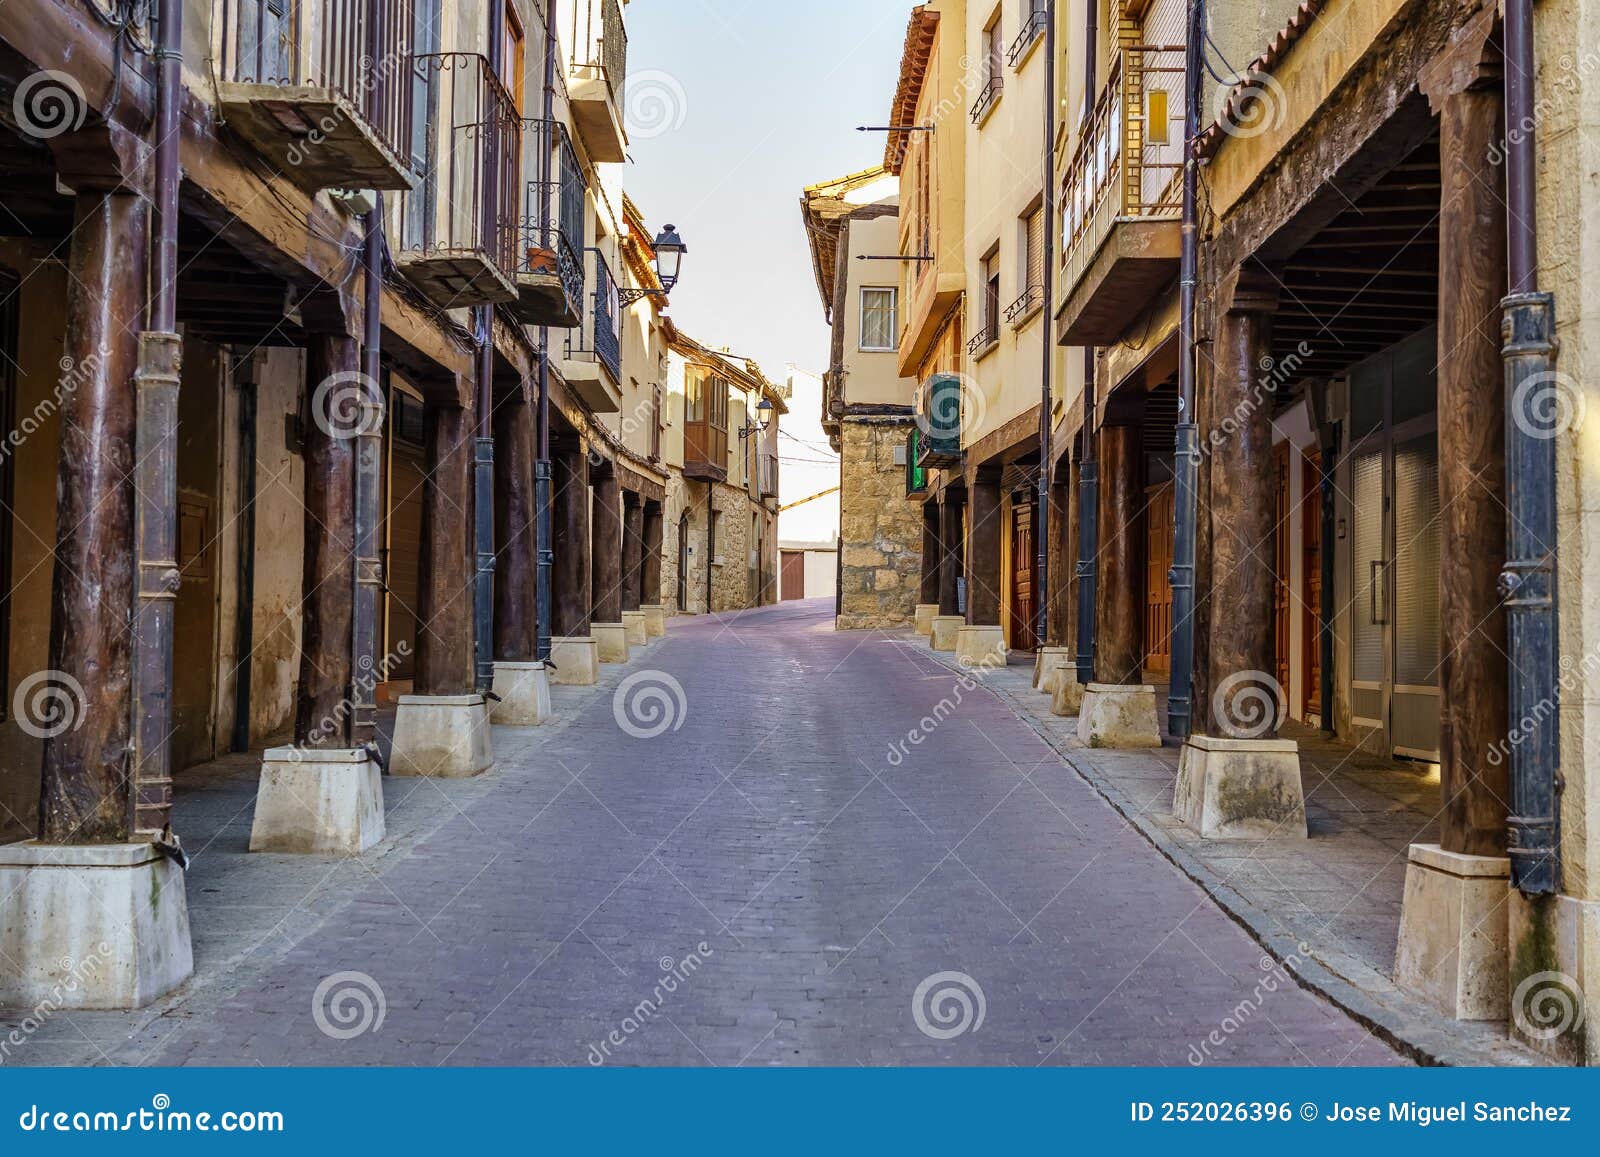 main street with medieval arcades made of wooden columns in san estaban de gormaz, soria.